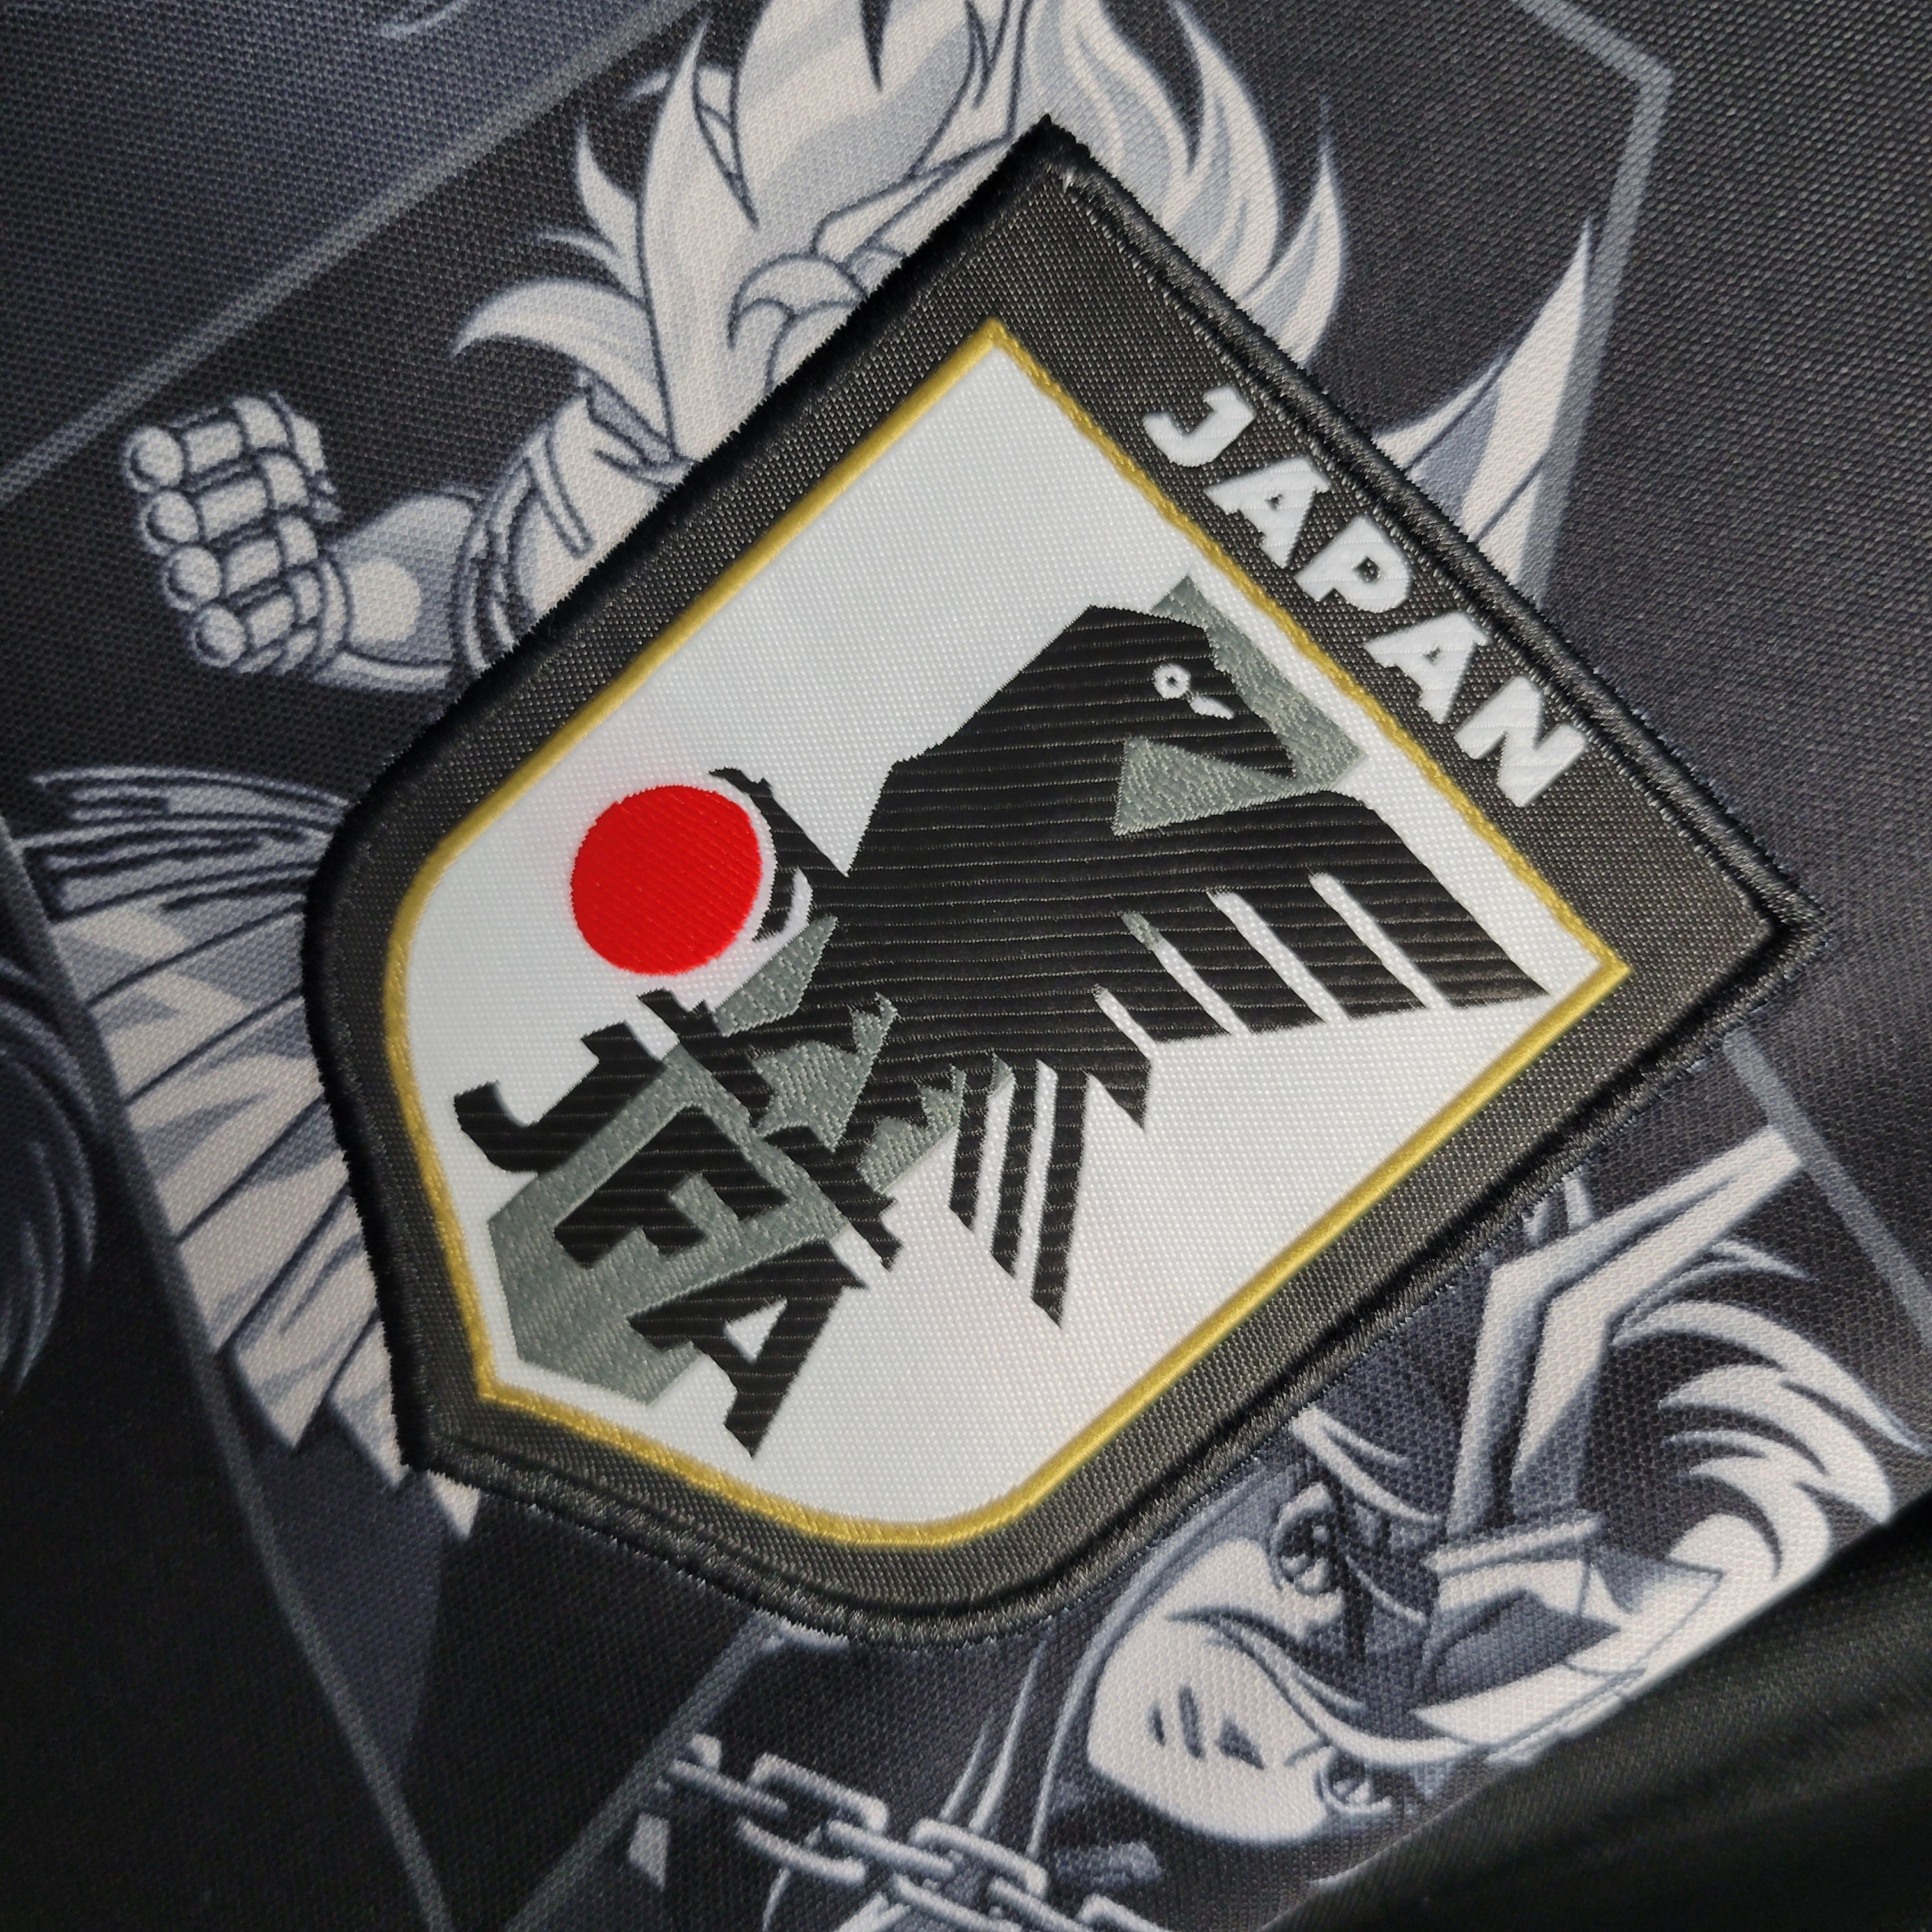 Japan National Team Knights of the Zodiac Black Kit